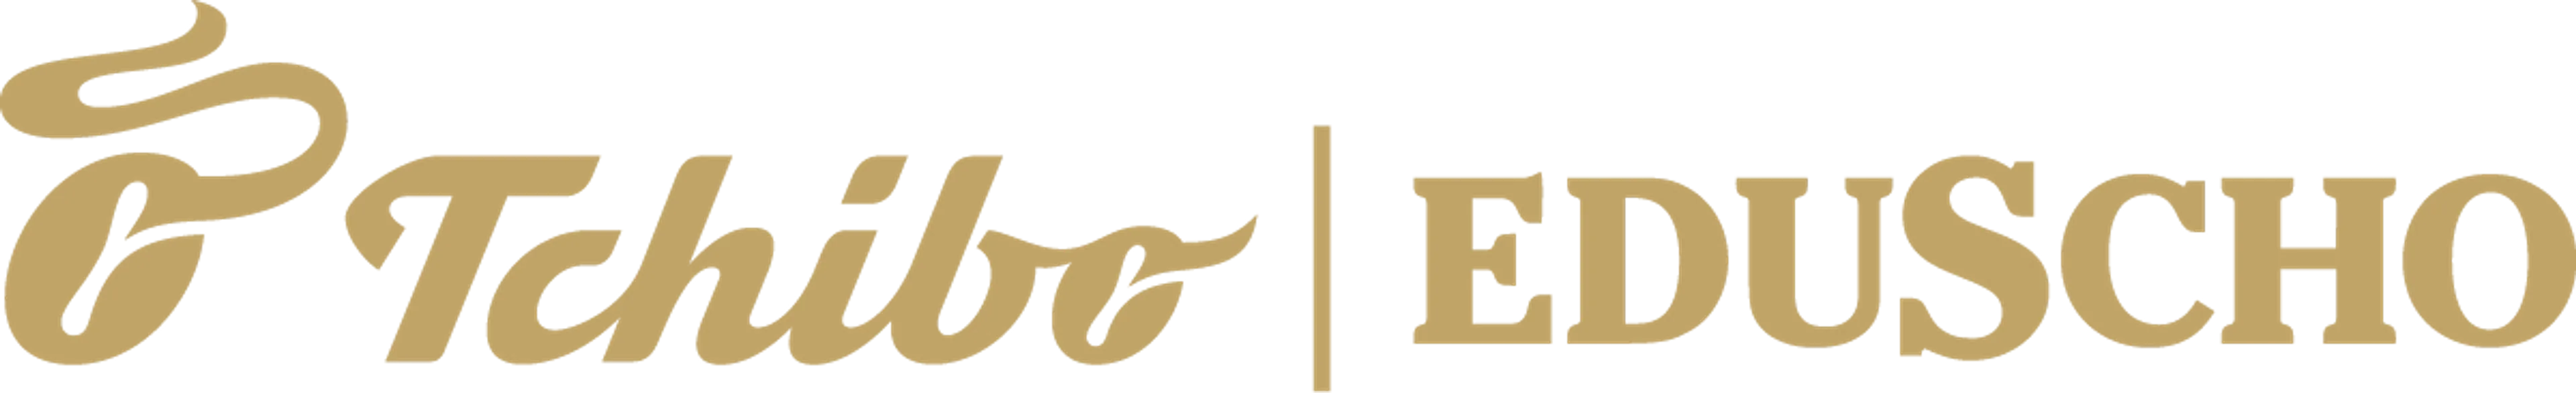 TCHIBO / EDUSCHO logo